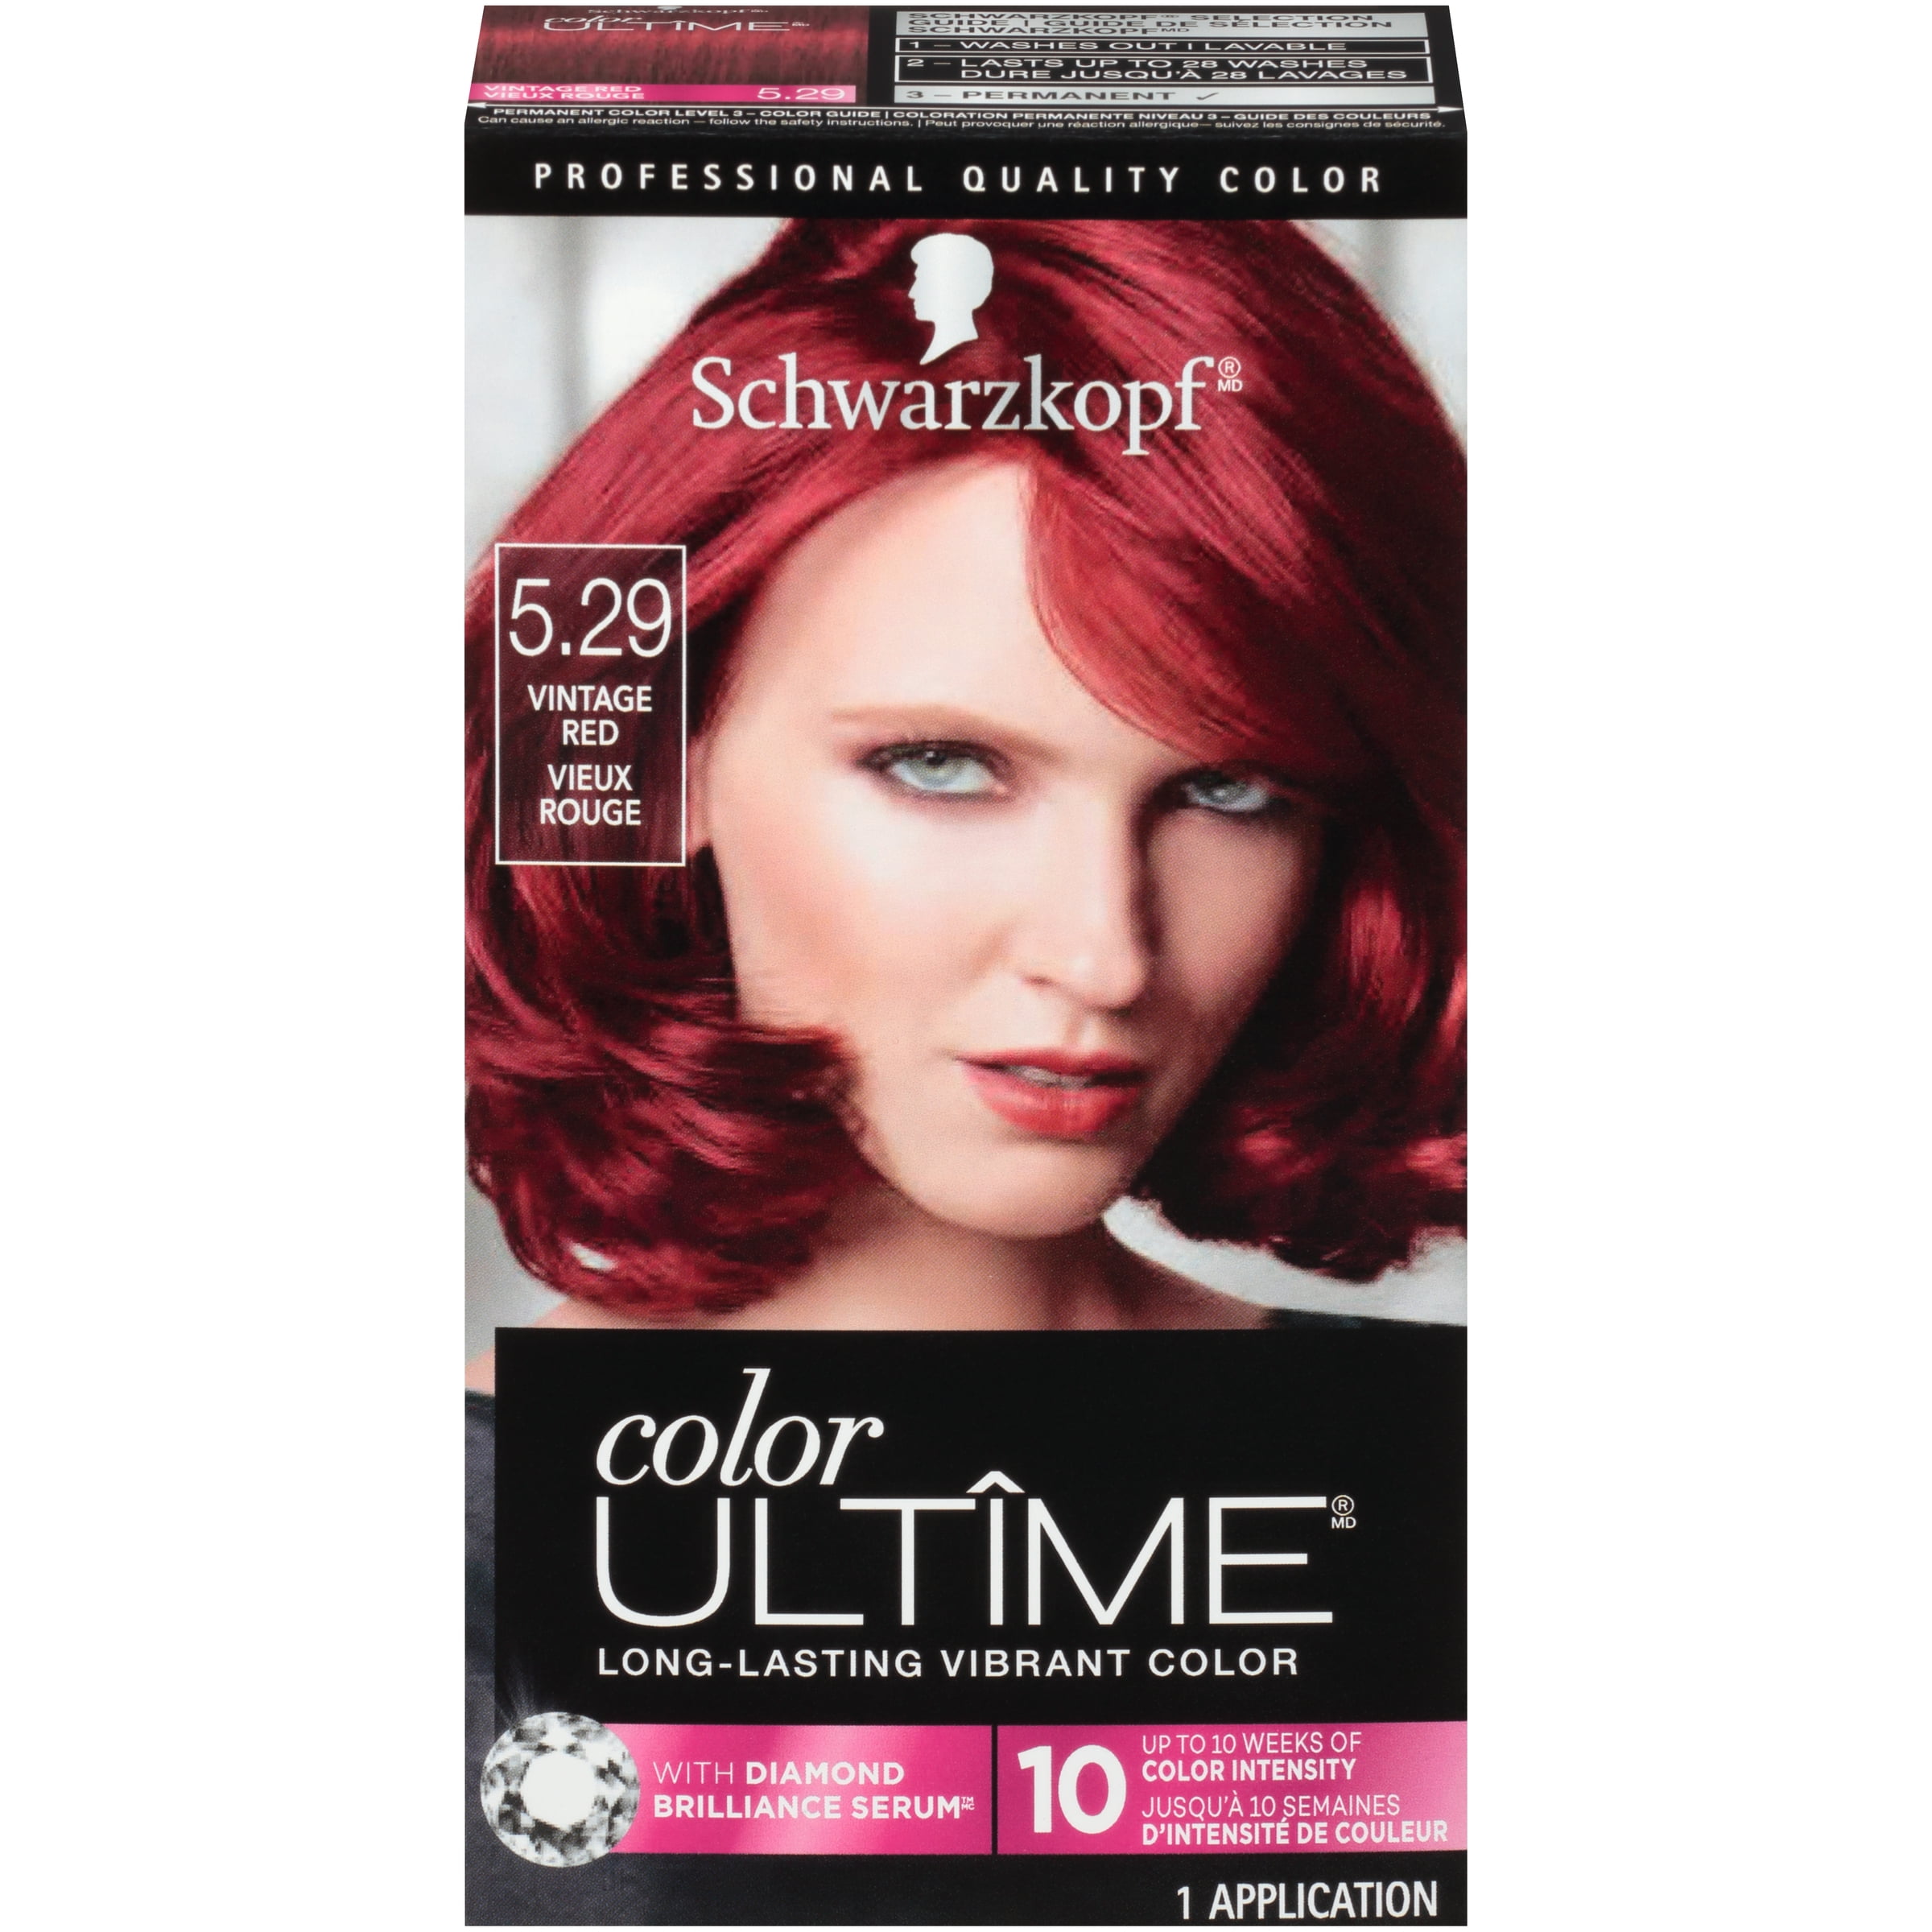 Schwarzkopf Ultime Permanent Hair Color Cream, 5.29 Vintage Red